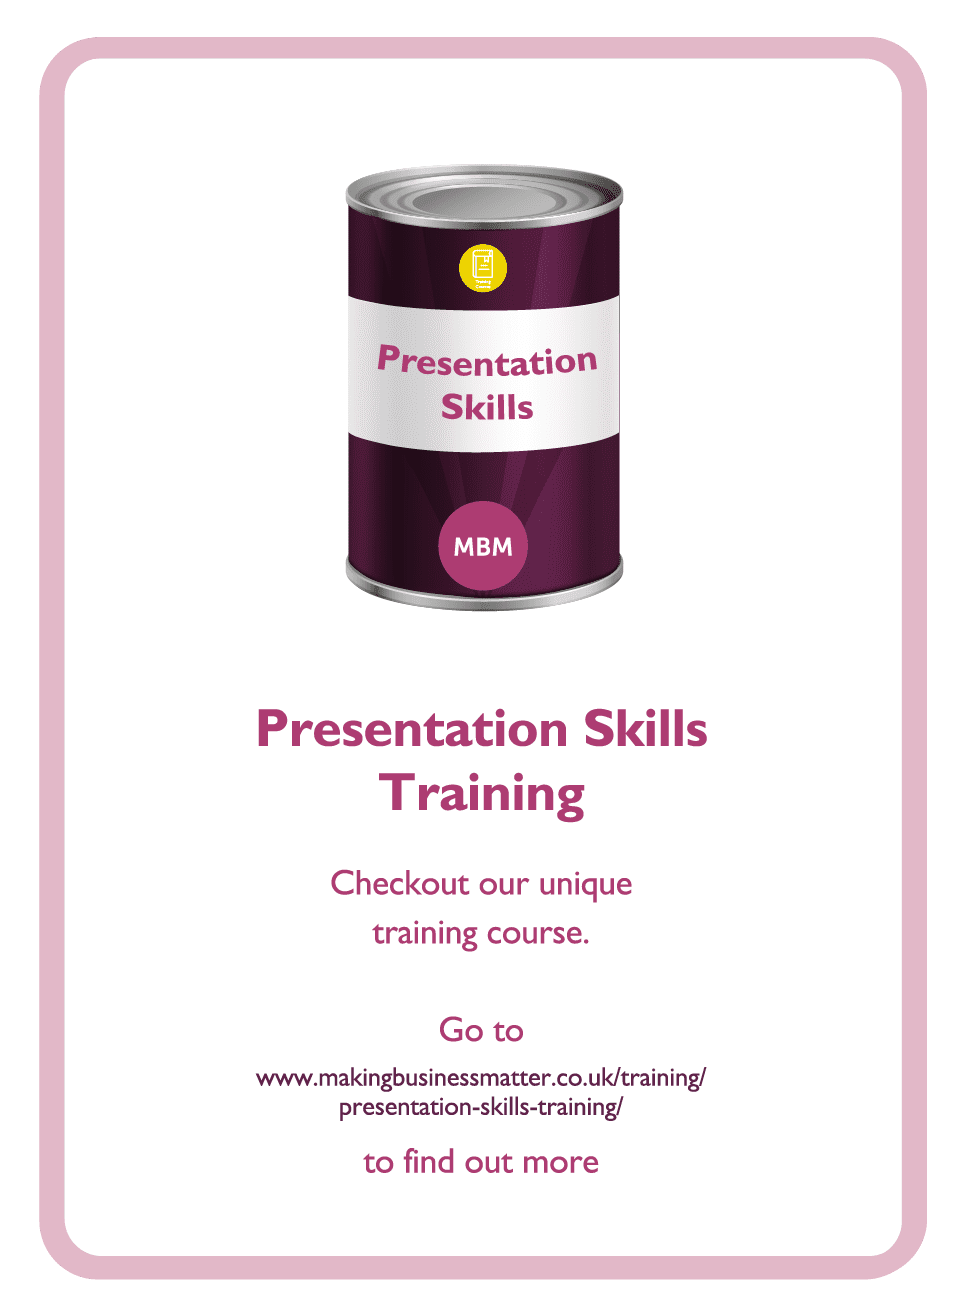 Coaching card titled Presentation skills training